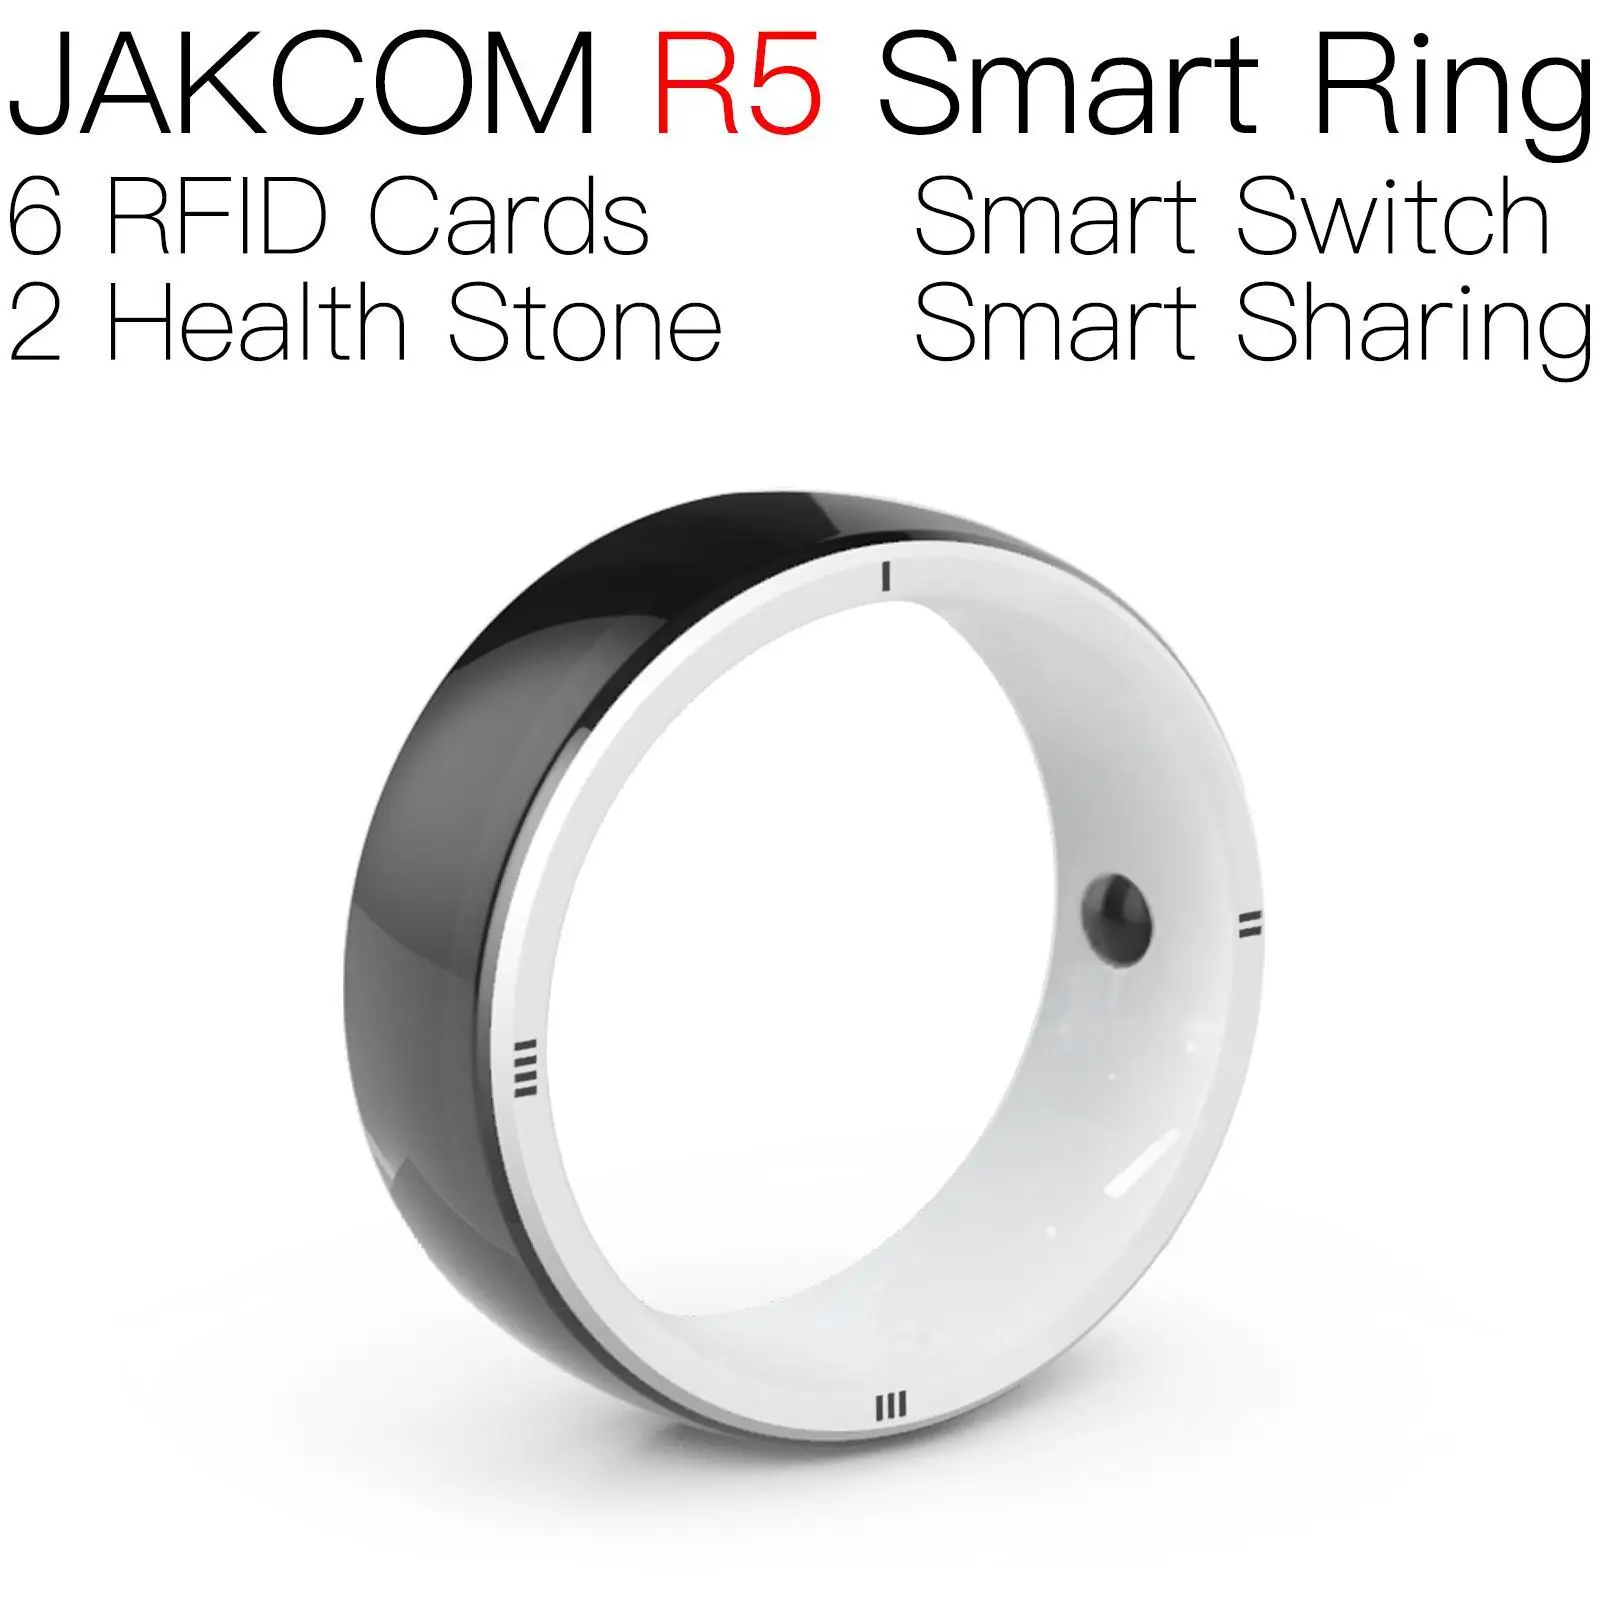 

JAKCOM R5 Smart Ring Super value as rewritable rfid glue dropping mini tag keyfobs ticket scanner nfc new